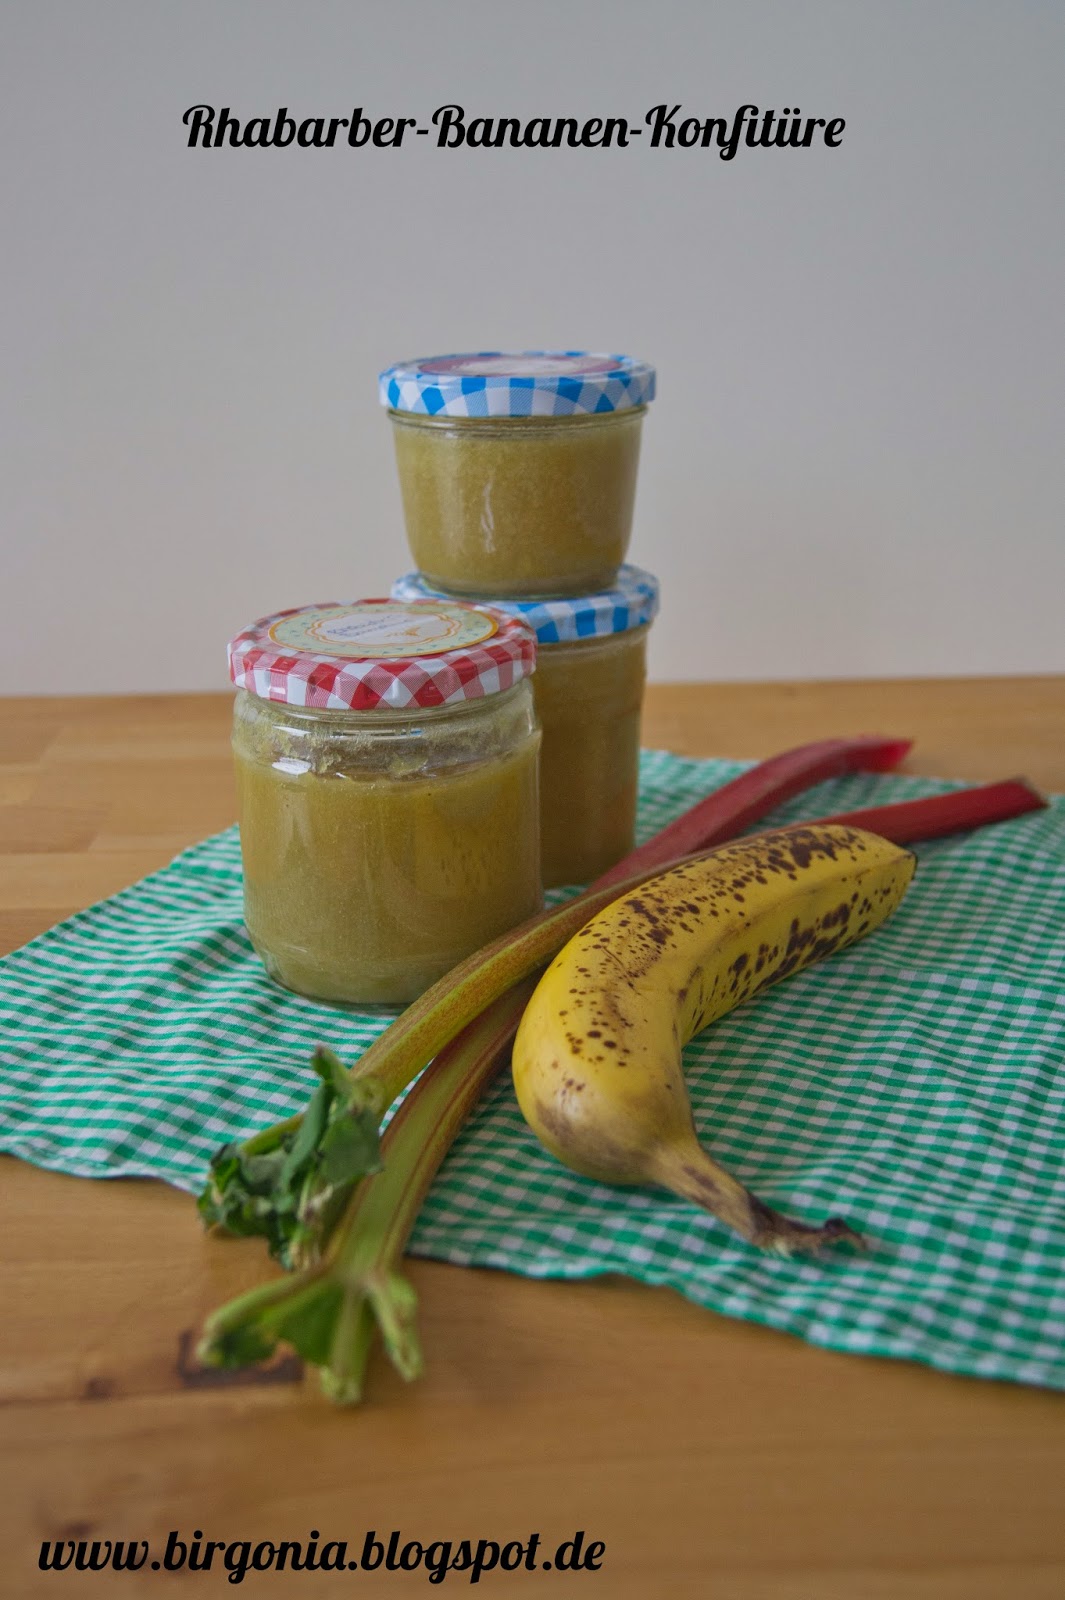 birgonia: Rhabarber-Bananen-Marmelade